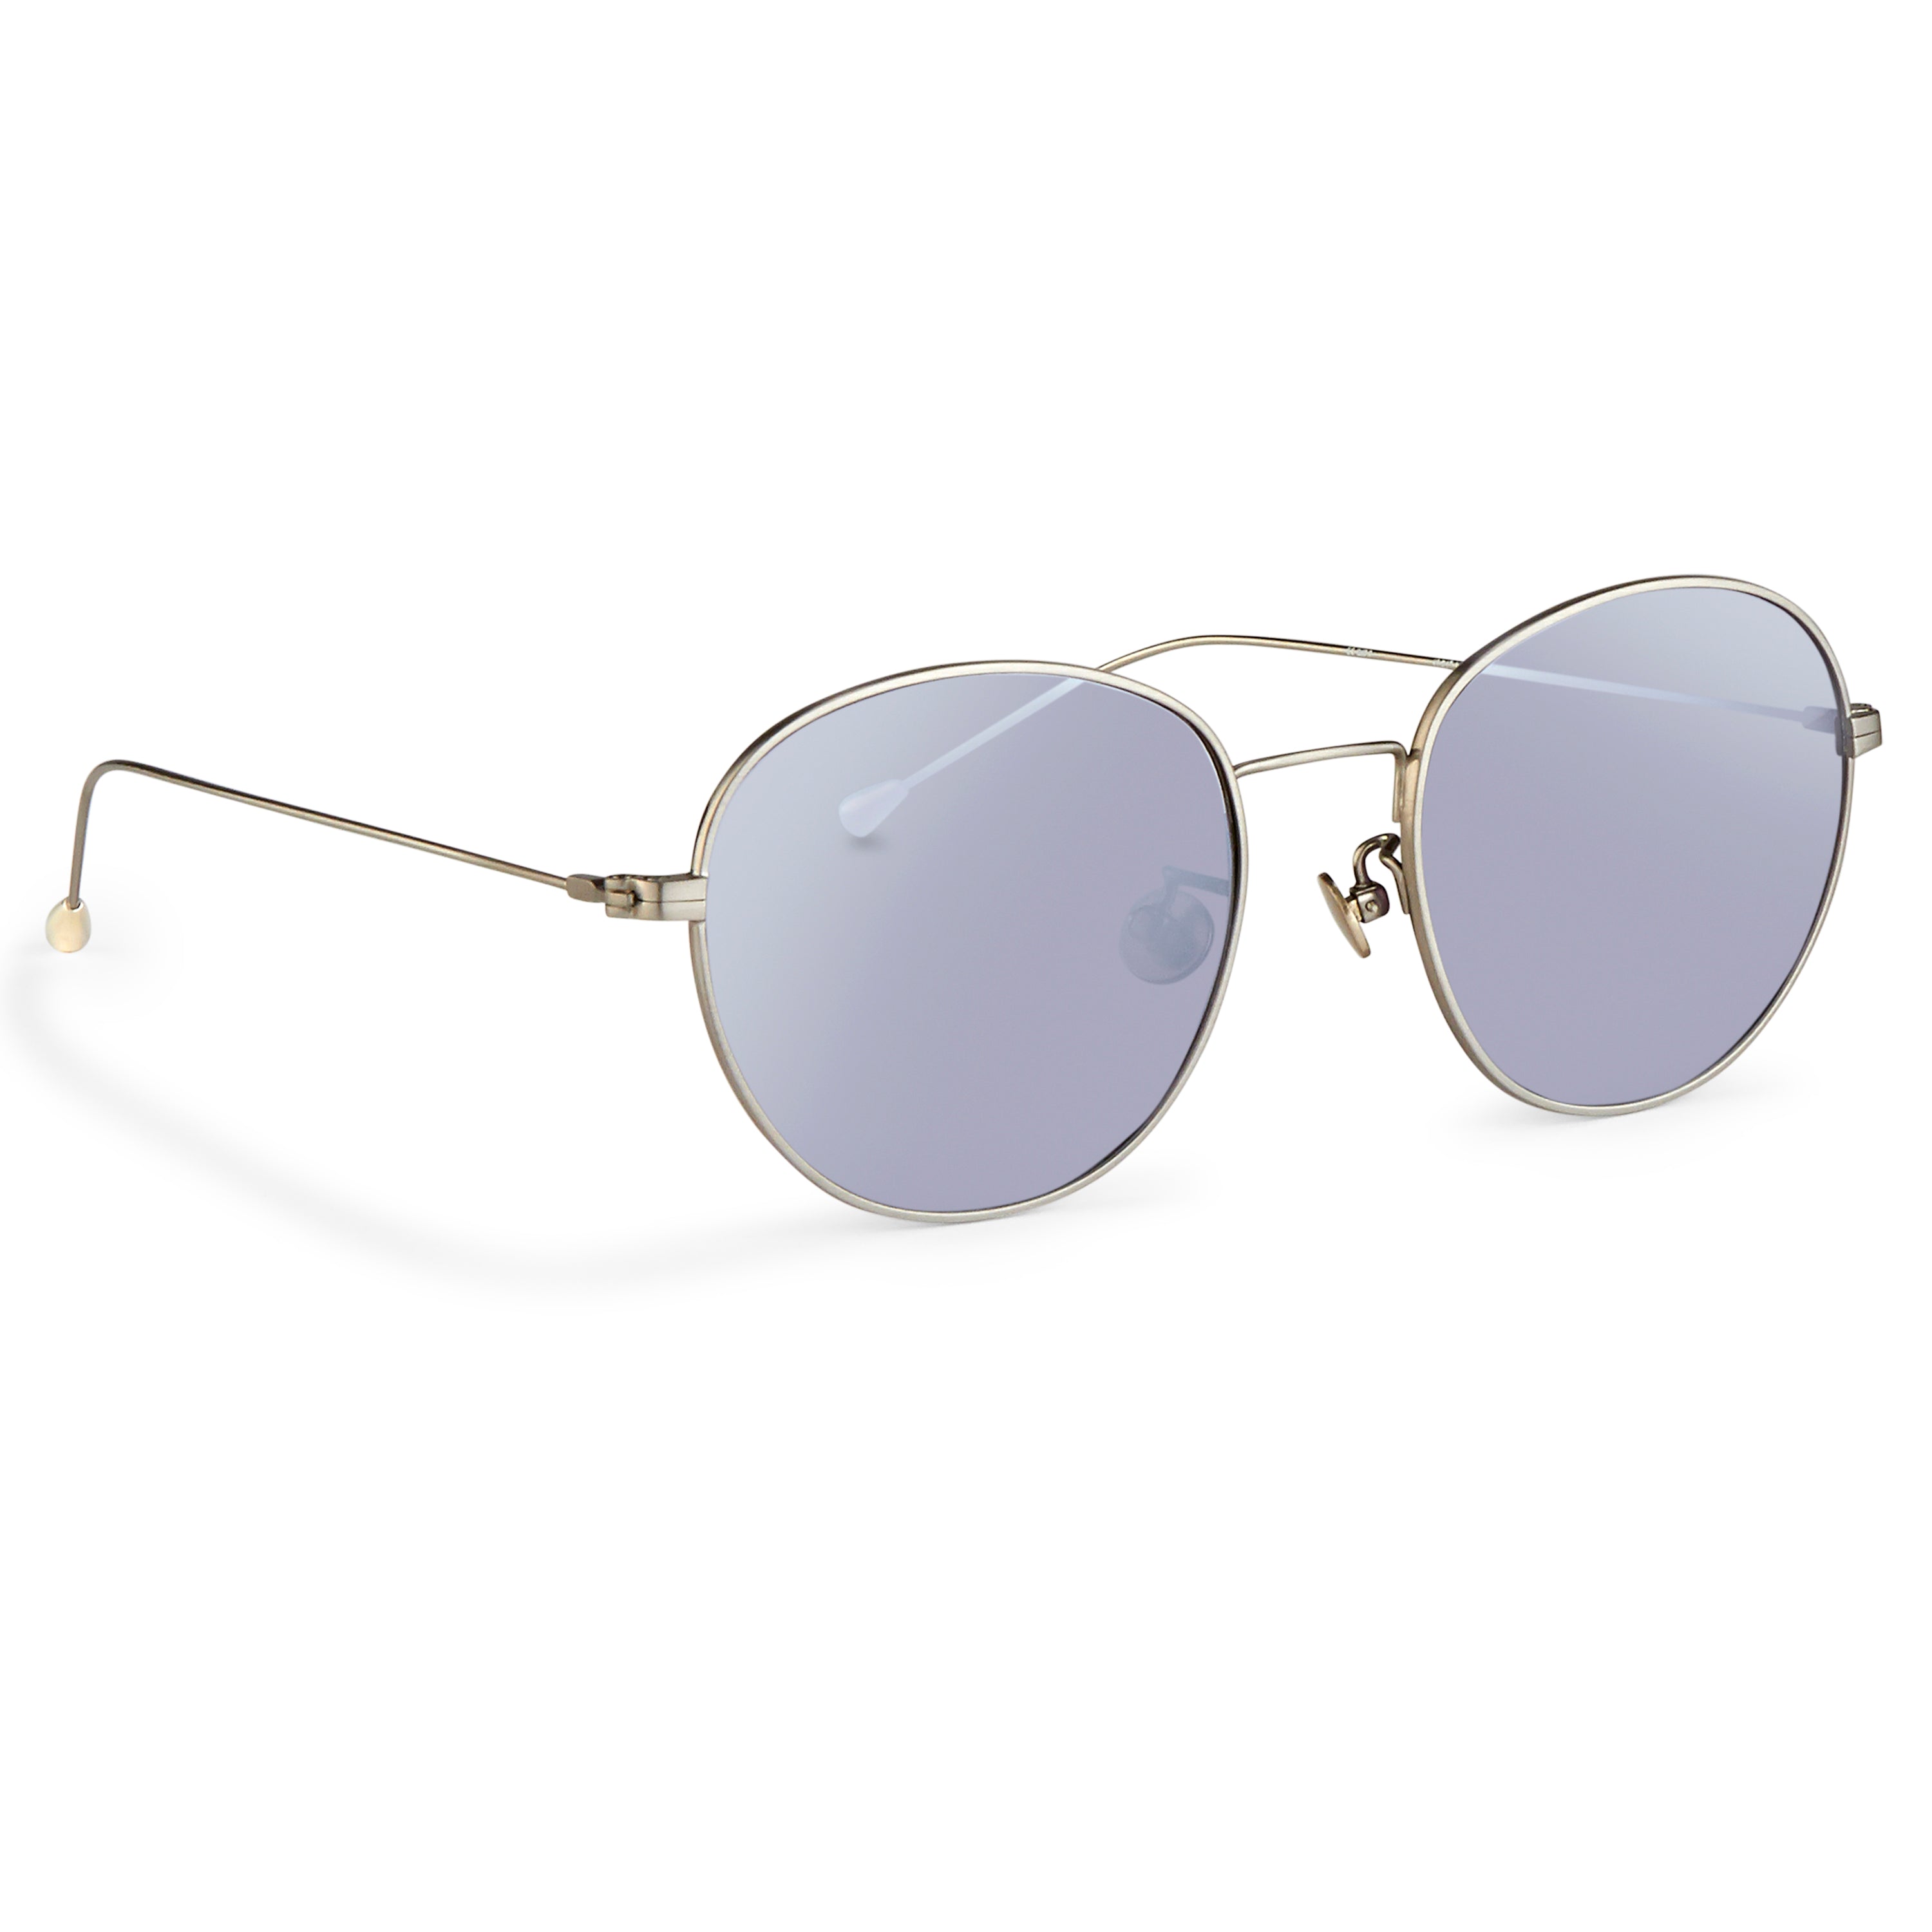 Ann Demeulemeester Sunglasses Oval Silver